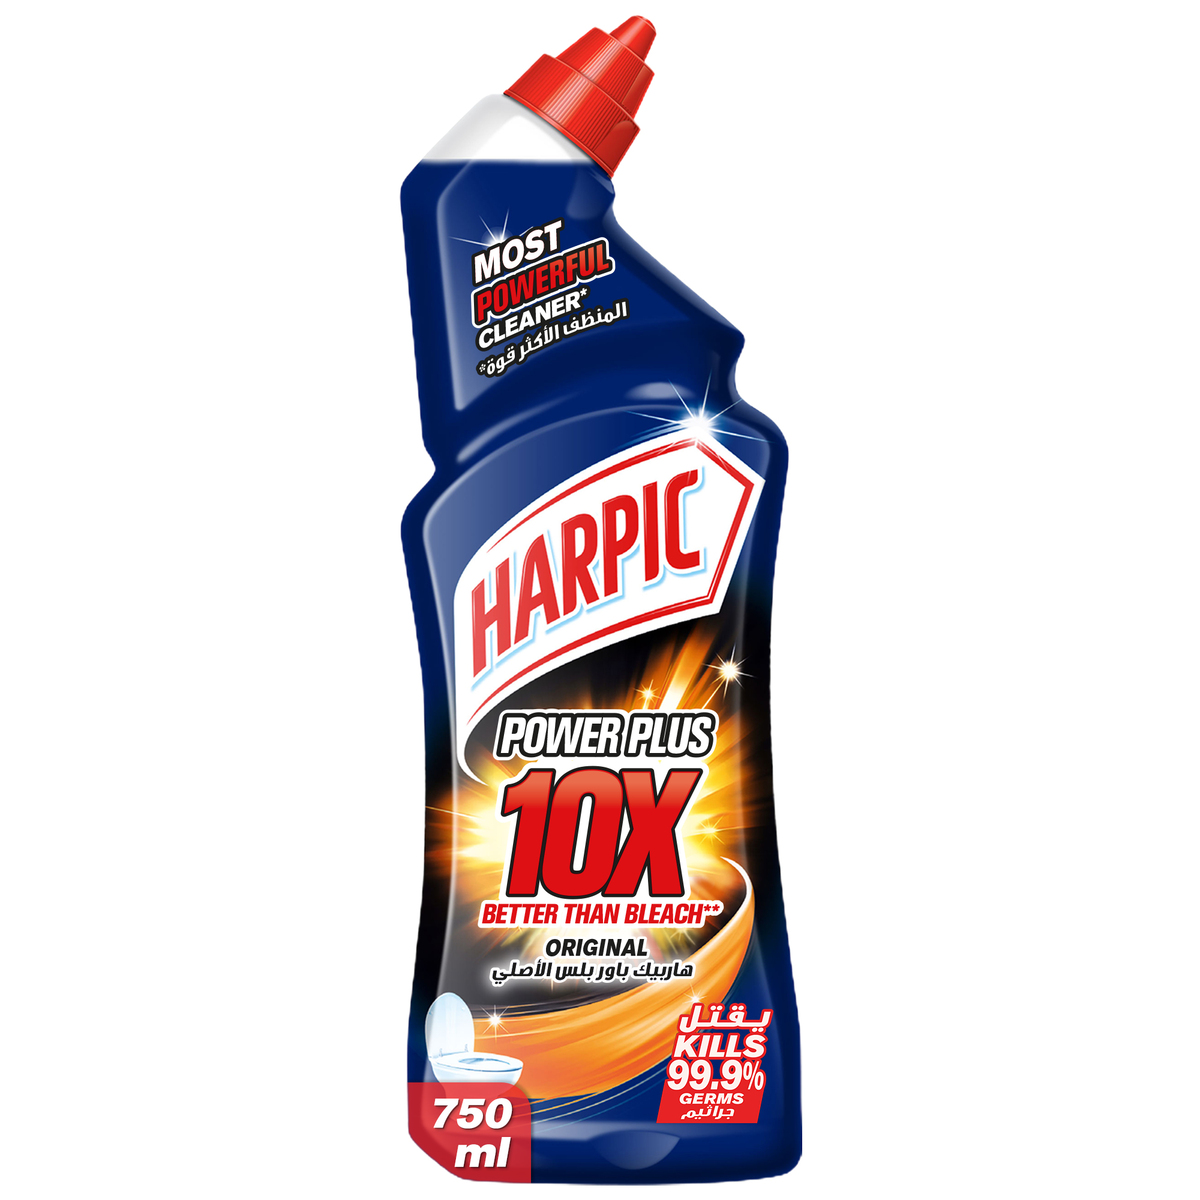 Harpic Original Power Plus 10X Most Powerful Toilet Cleaner 750 ml